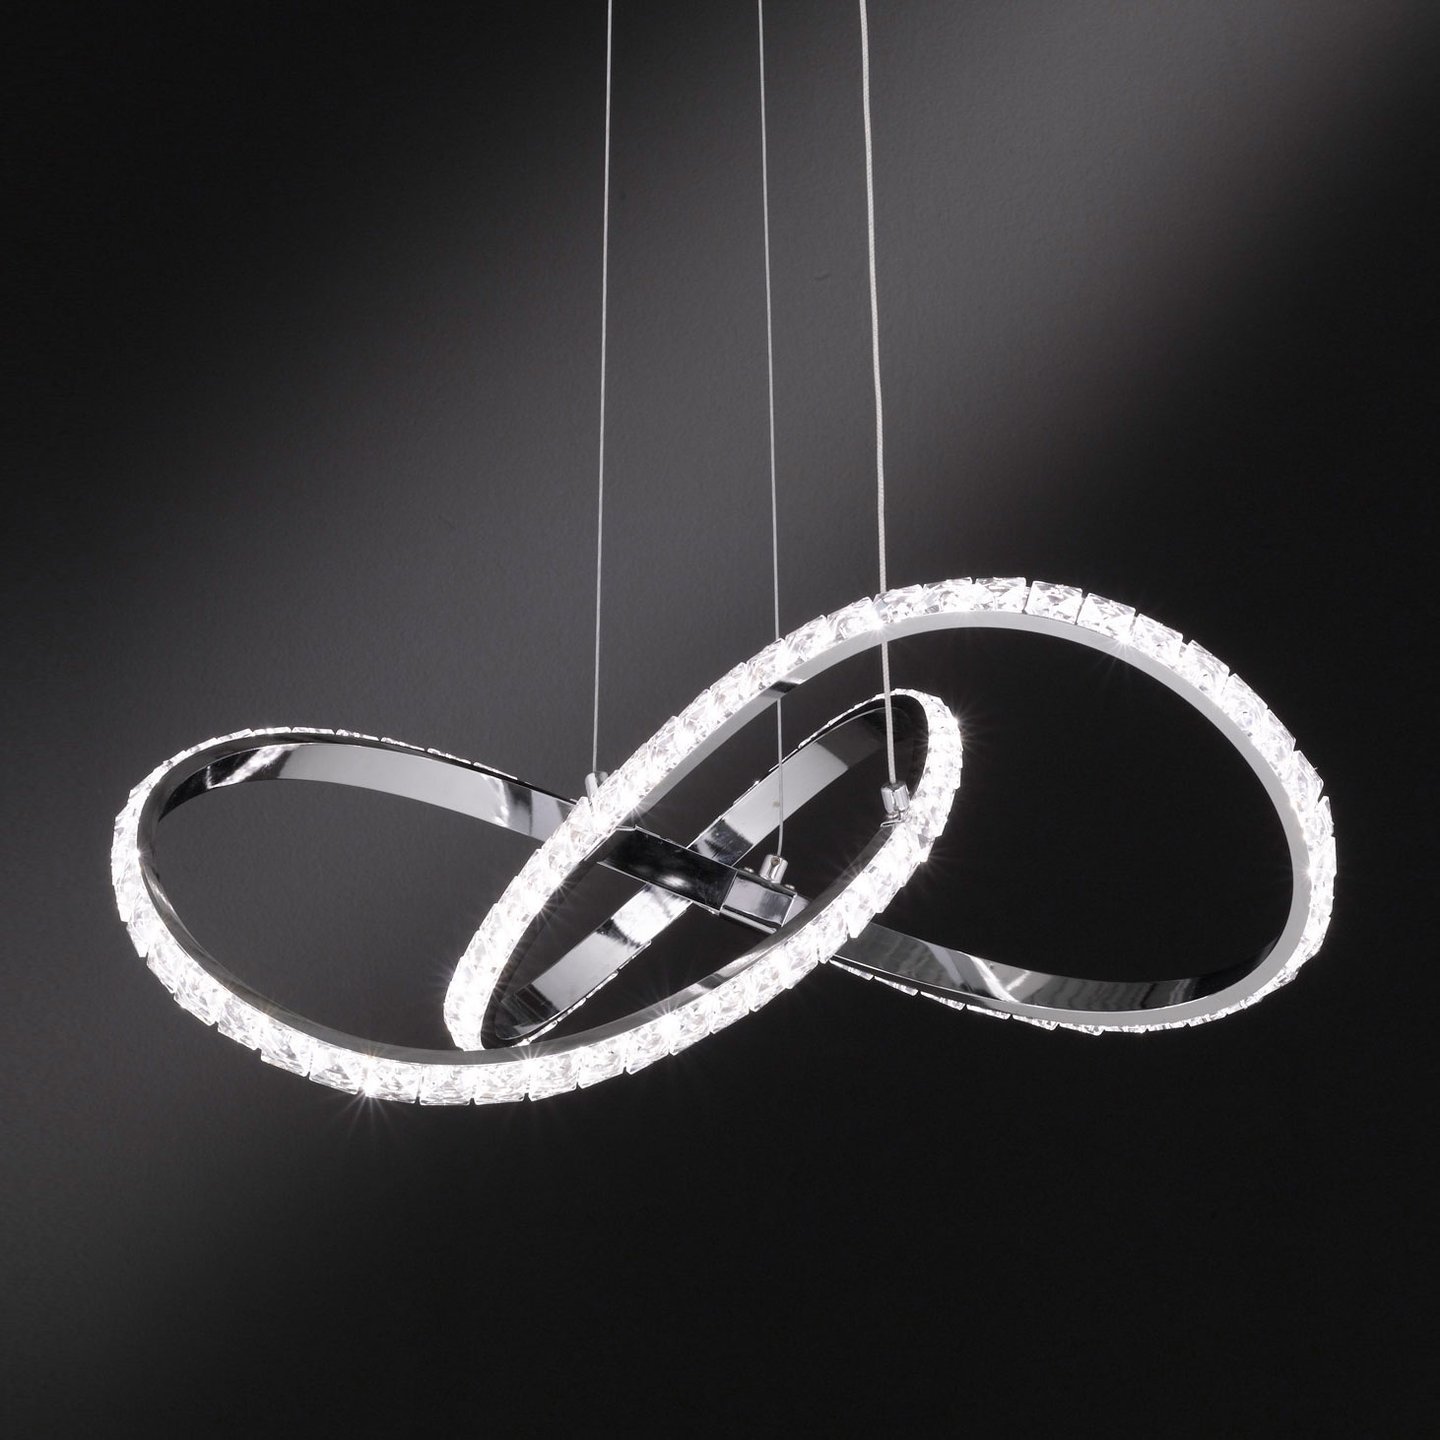 wofi Prisma LED pendant light with dimmer .7000 | REUTER